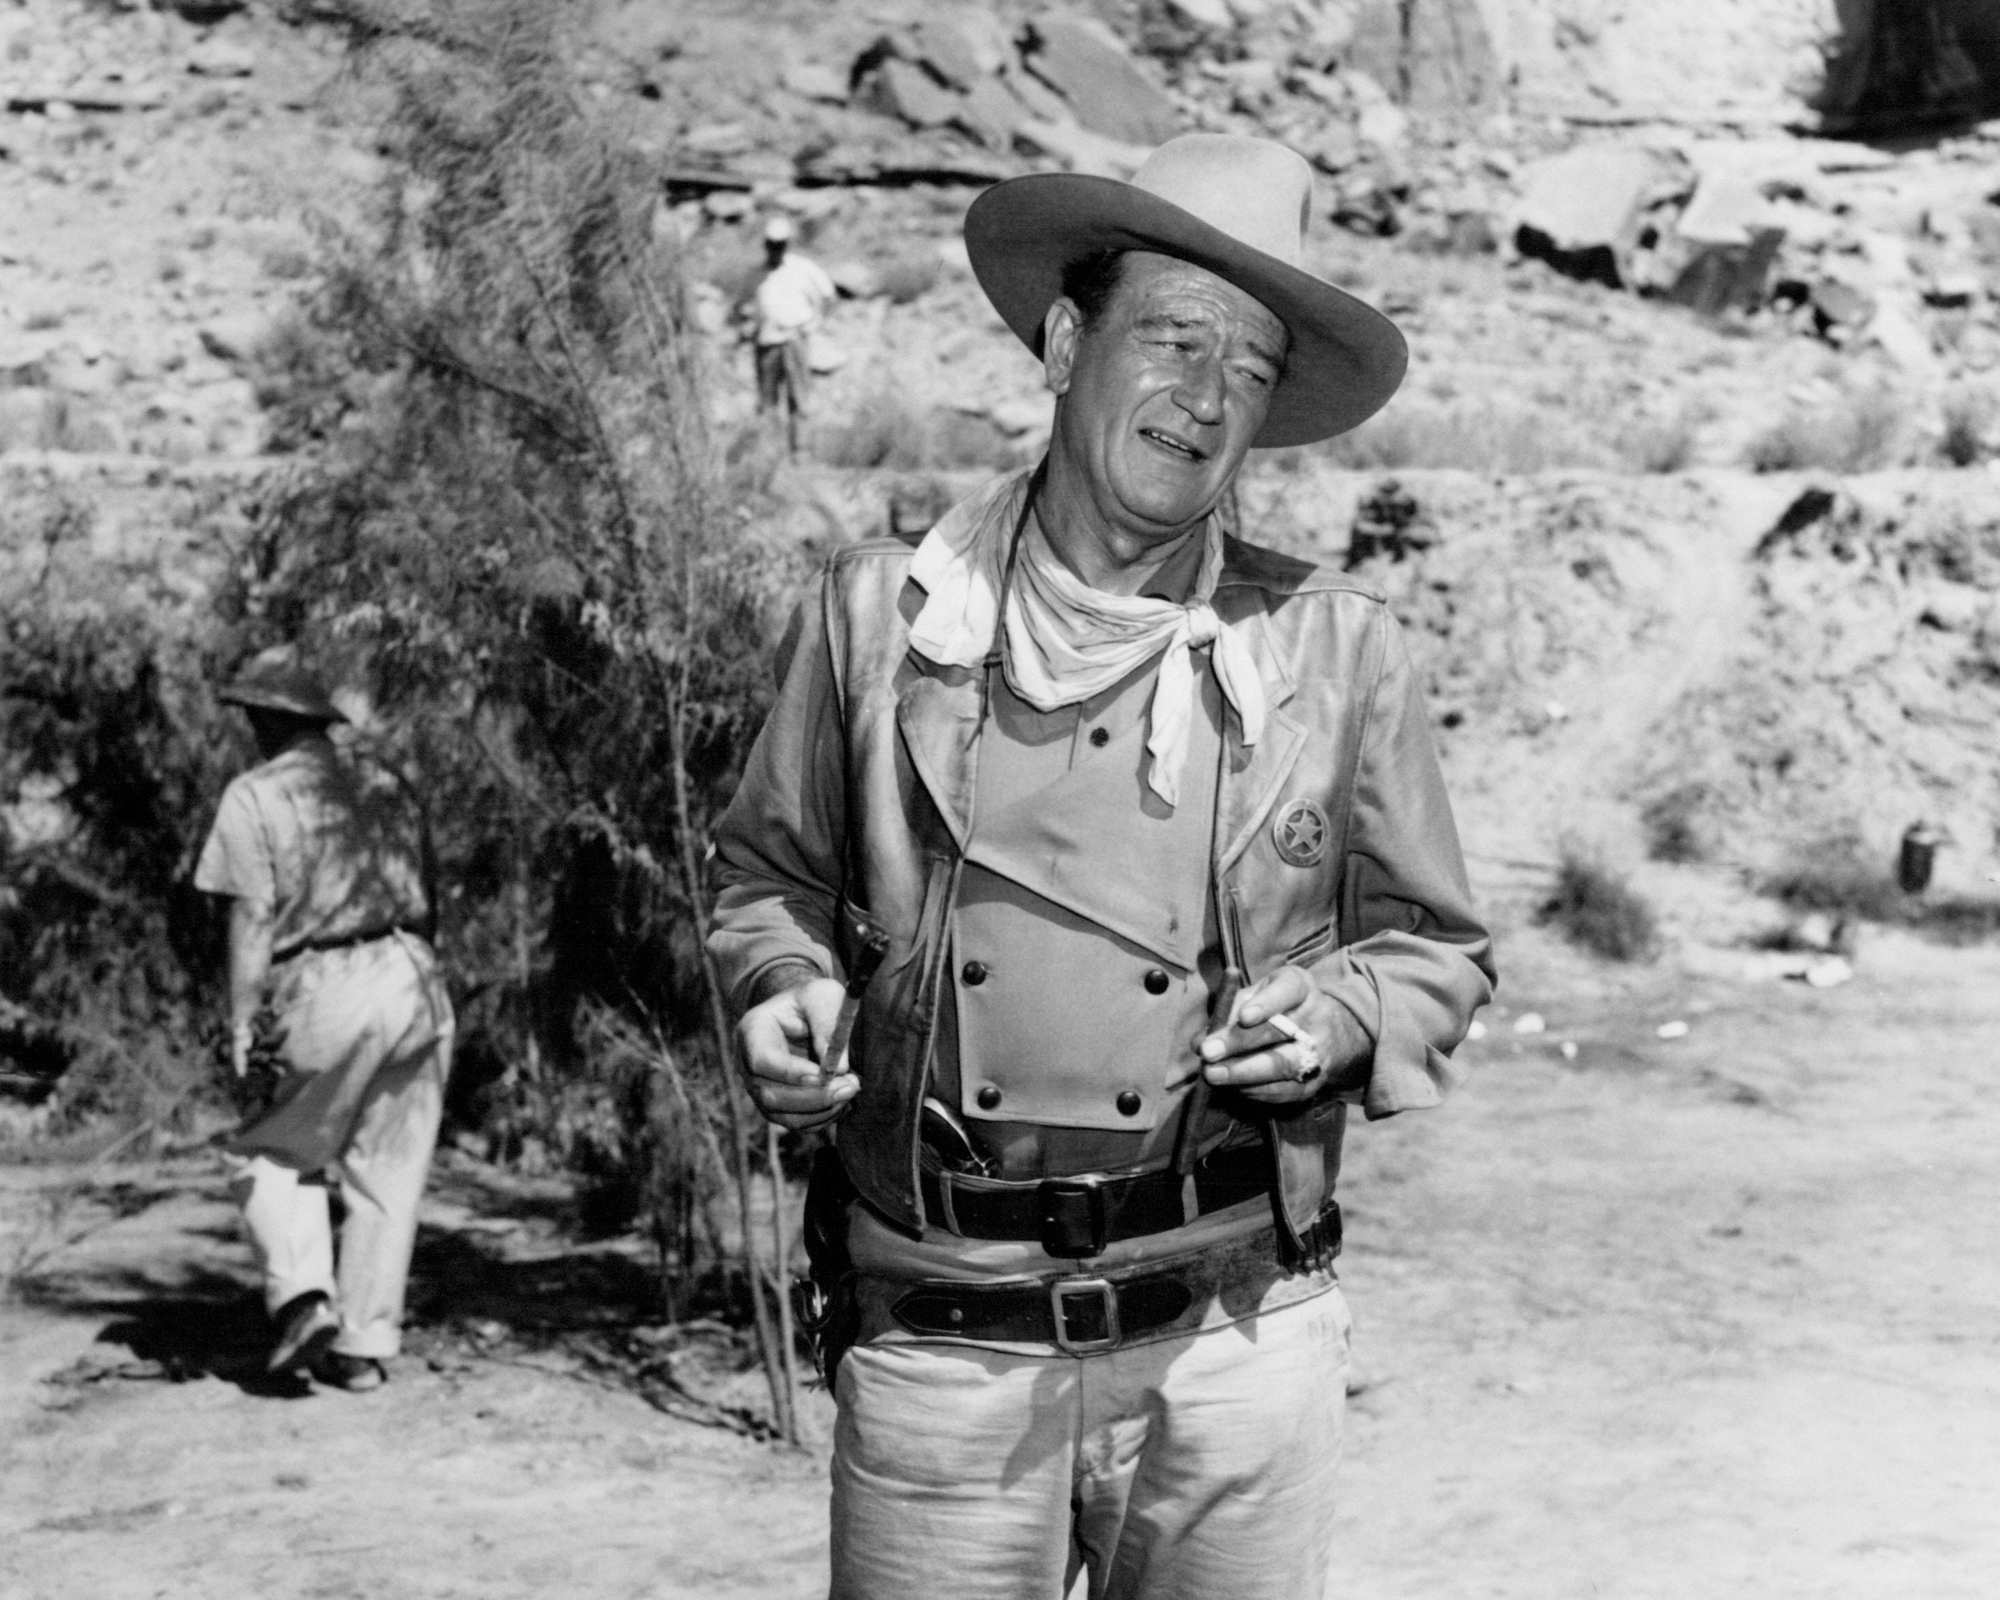 Oscar-winning actor John Wayne holding a cigarette